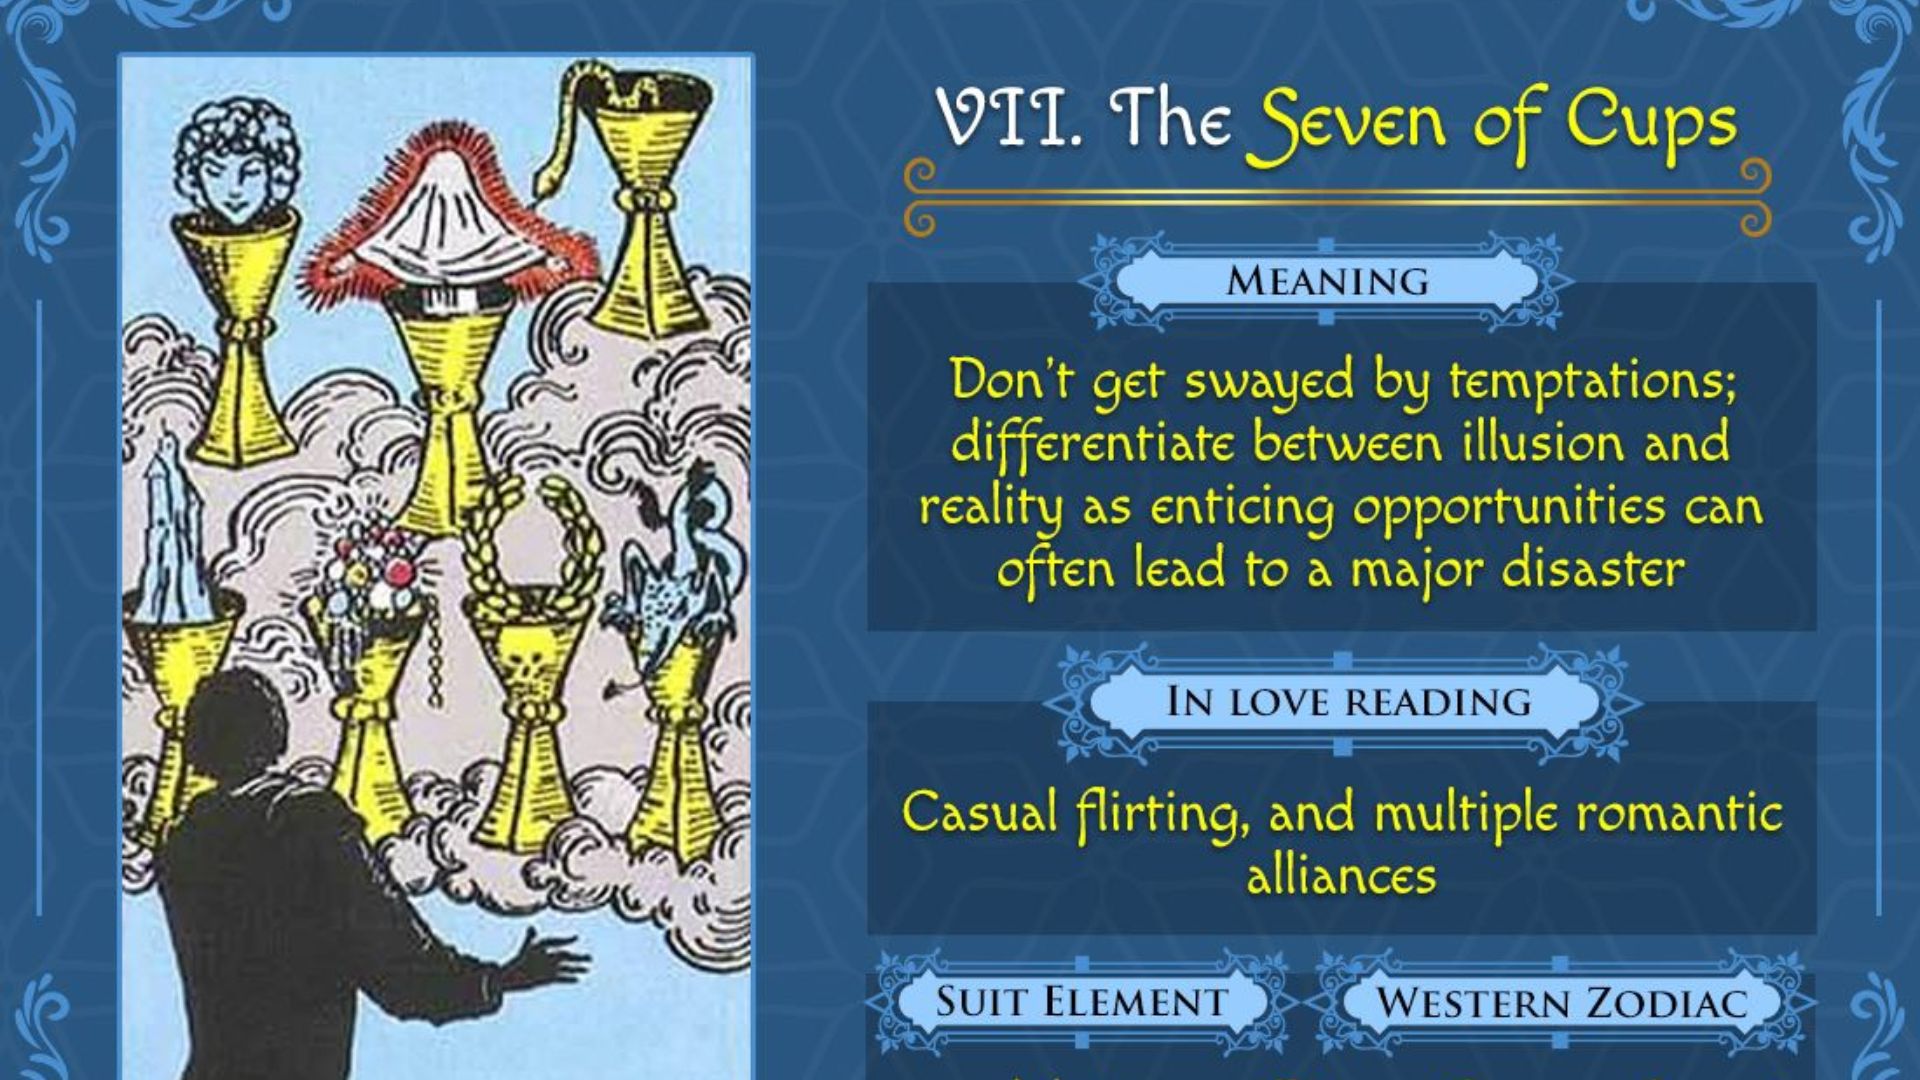 7 of Cups Tarot Card Description